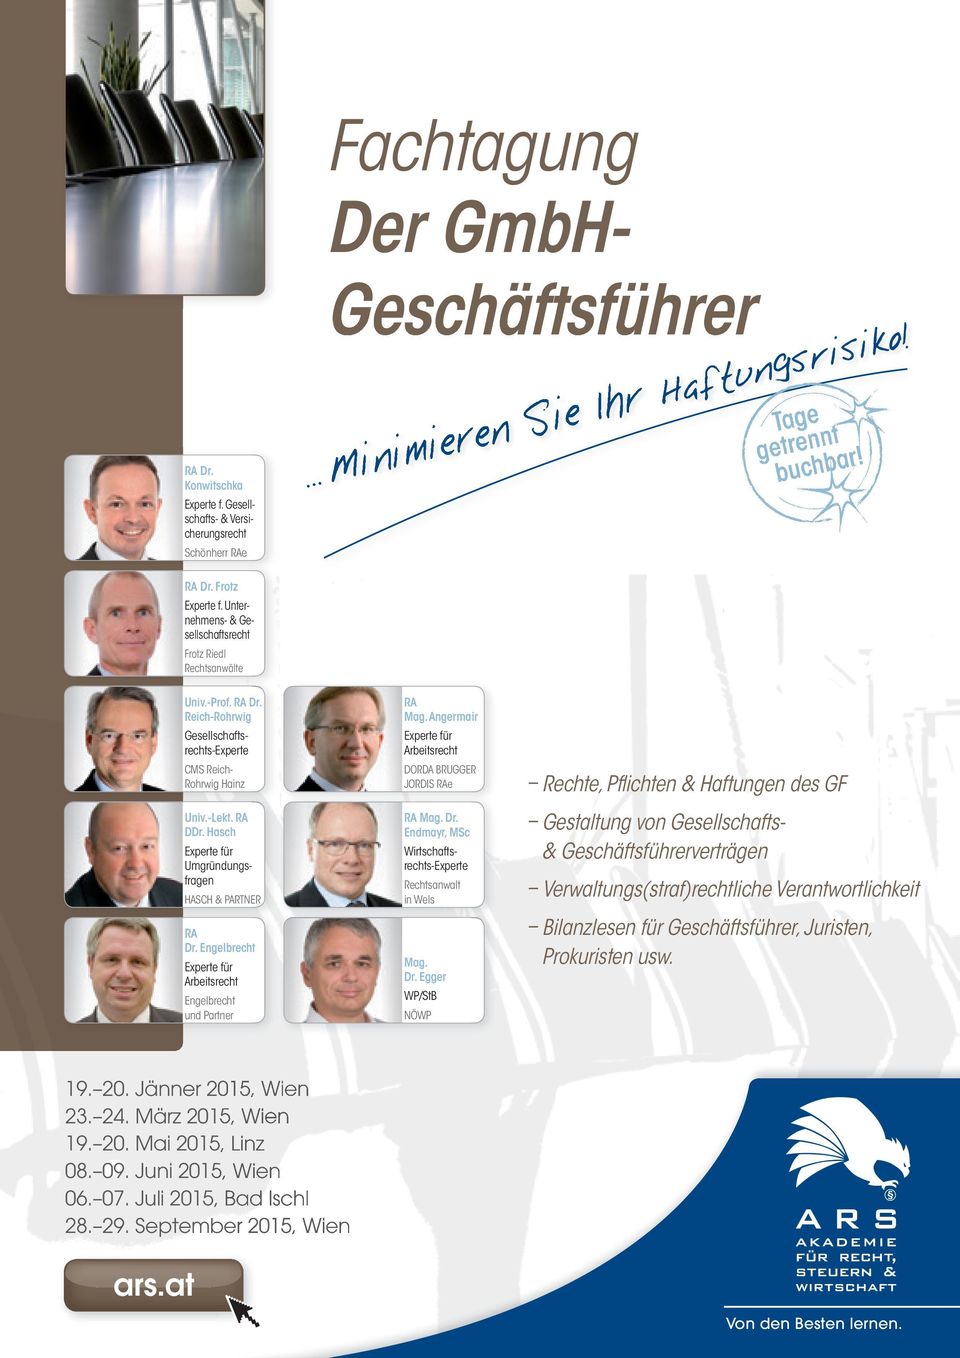 Reich-Rohrwig Gesellschaftsrechts-Experte CMS Reich- Rohrwig Hainz RA Dr. Engelbrecht Experte für Arbeitsrecht Engelbrecht und Partner RA Mag.